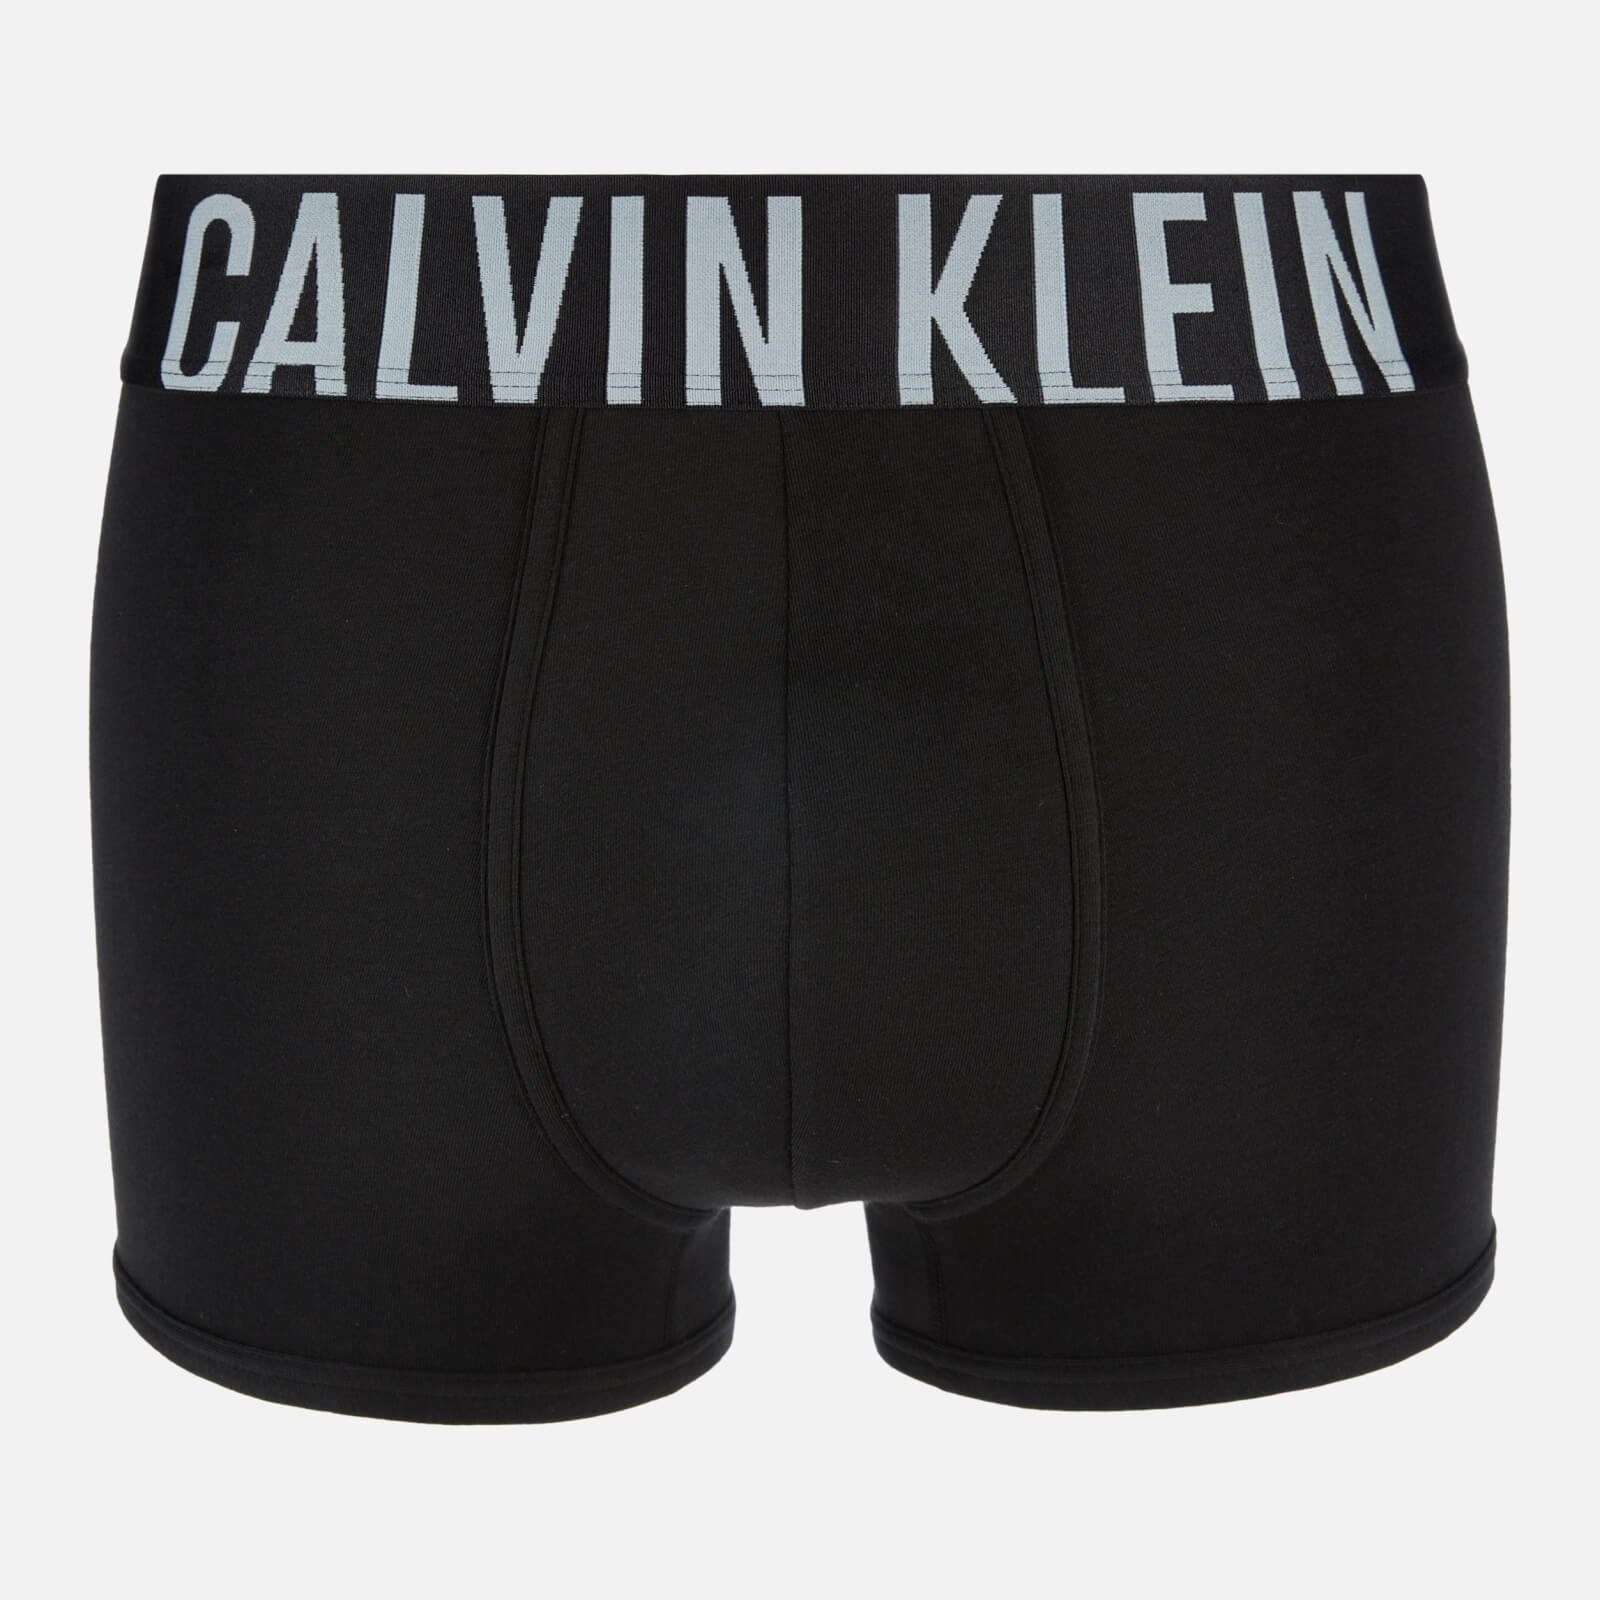 Calvin Klein Men's Intense Power 2-Pack Boxer Briefs - Black - S